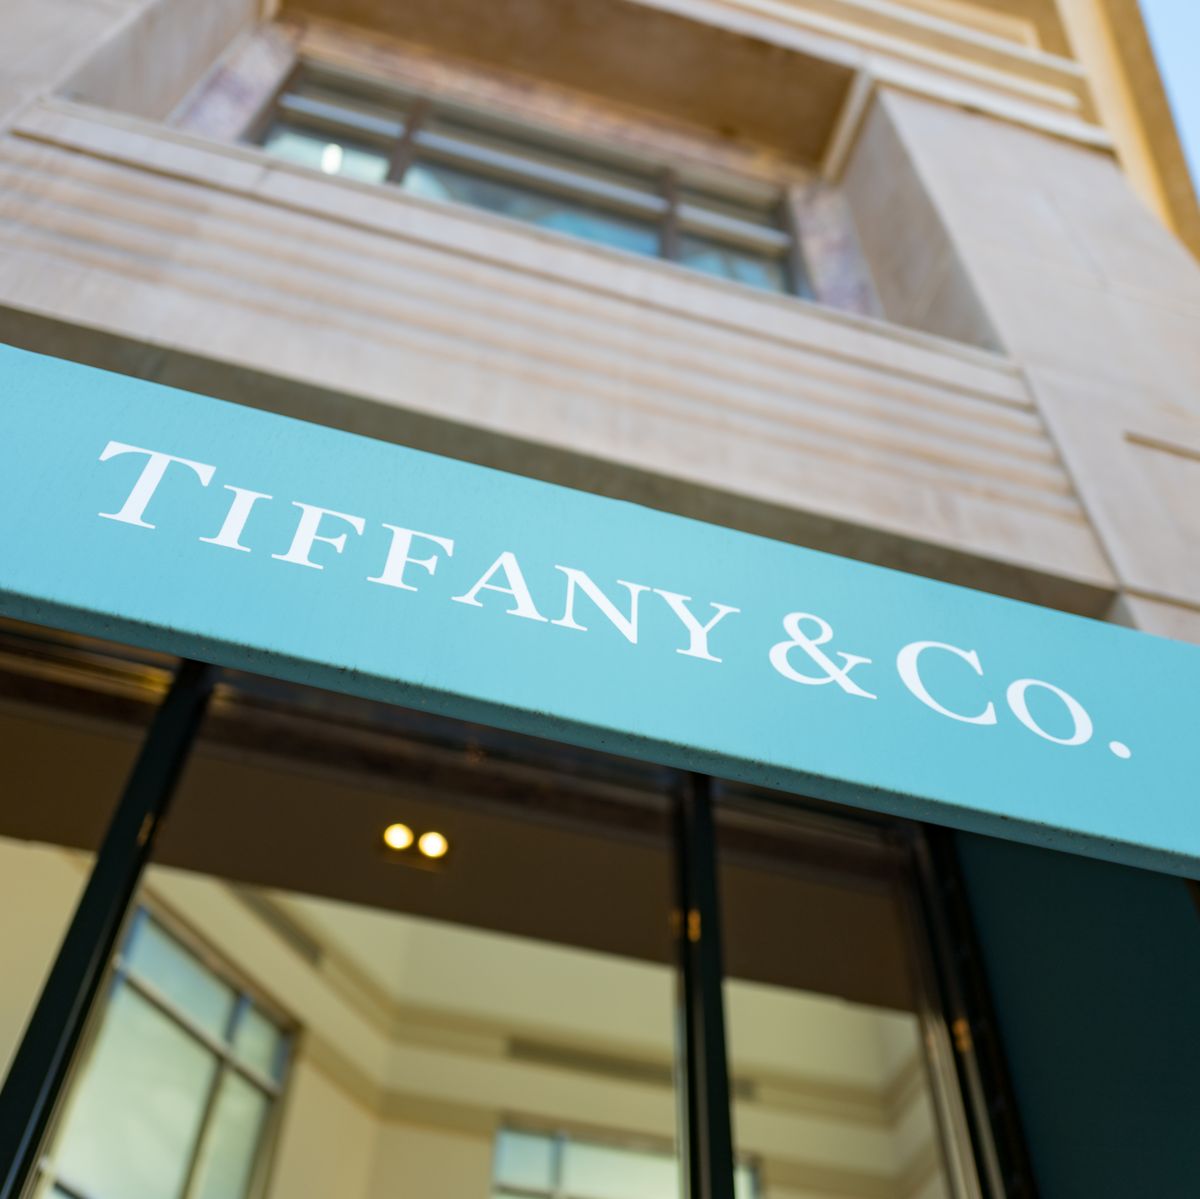 LVMH to buy US jeweller Tiffany for $16.2 billion - Chinadaily.com.cn